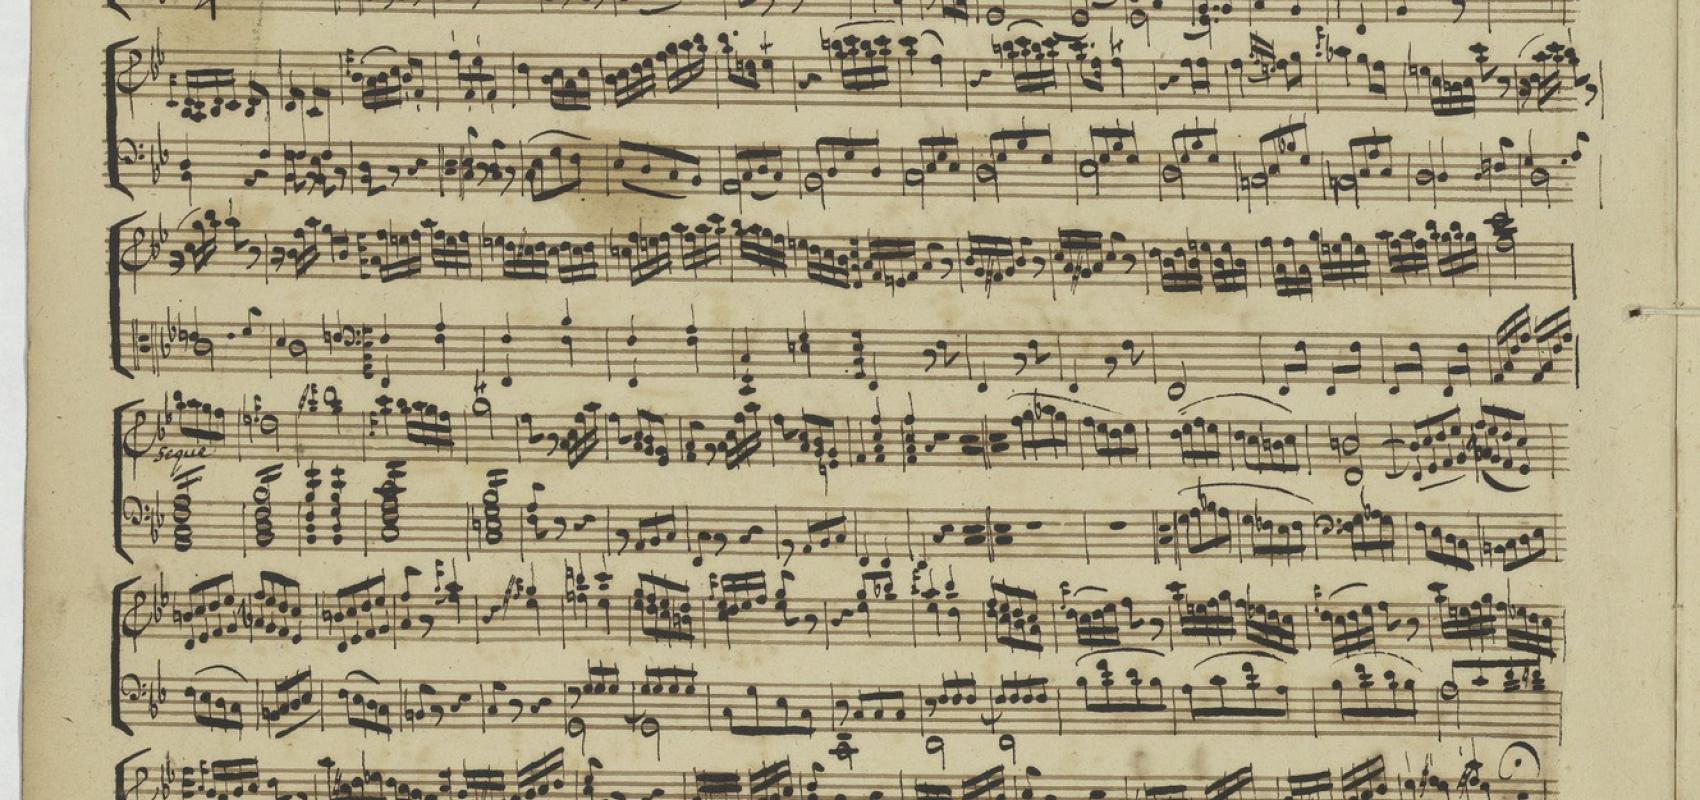 Sonate ou Concerto per il Cembalo 2 Violini. 2 Corni et Basso, de Henri-Joseph Rigel. BnF, département de la Musique, D-11704 -  - BnF